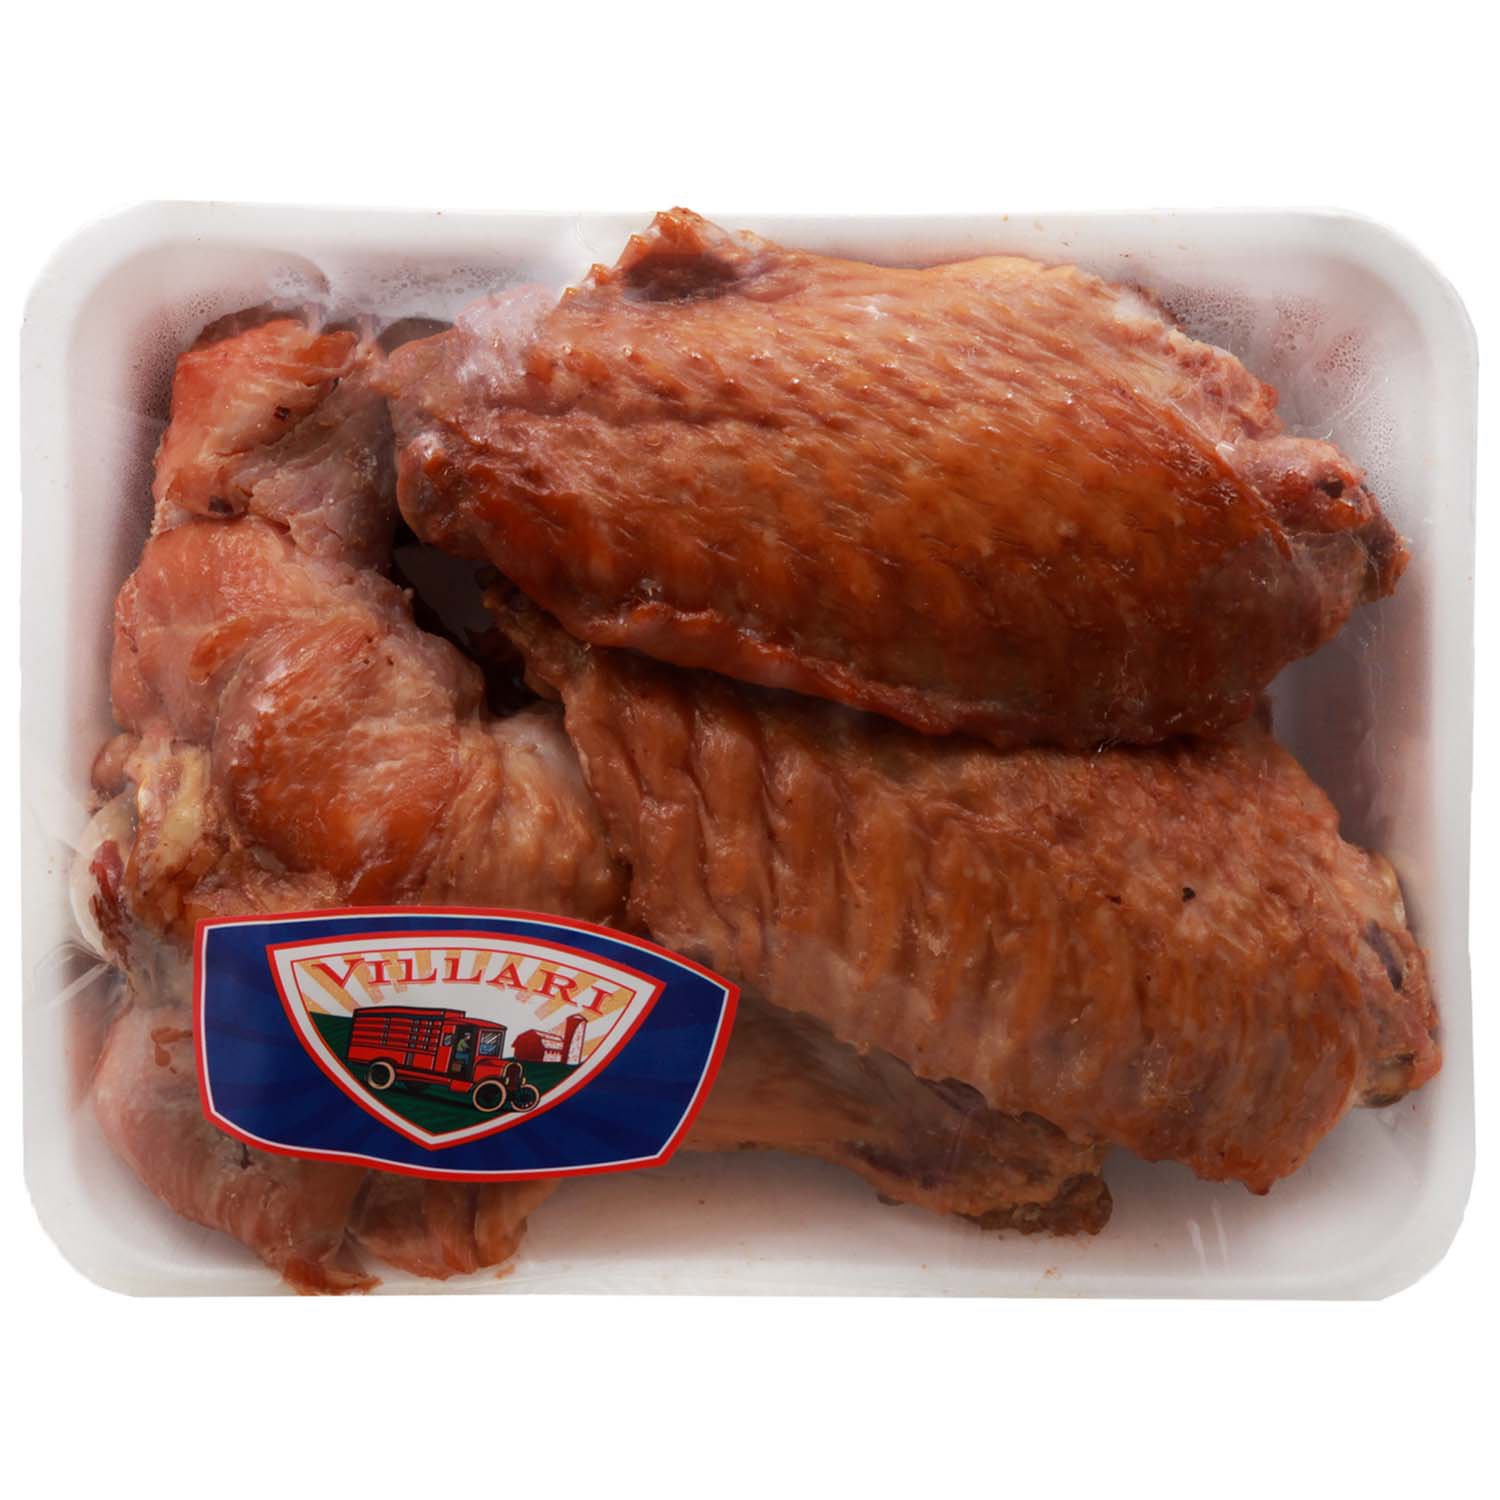 Smoked Turkey Wings - African Groceries